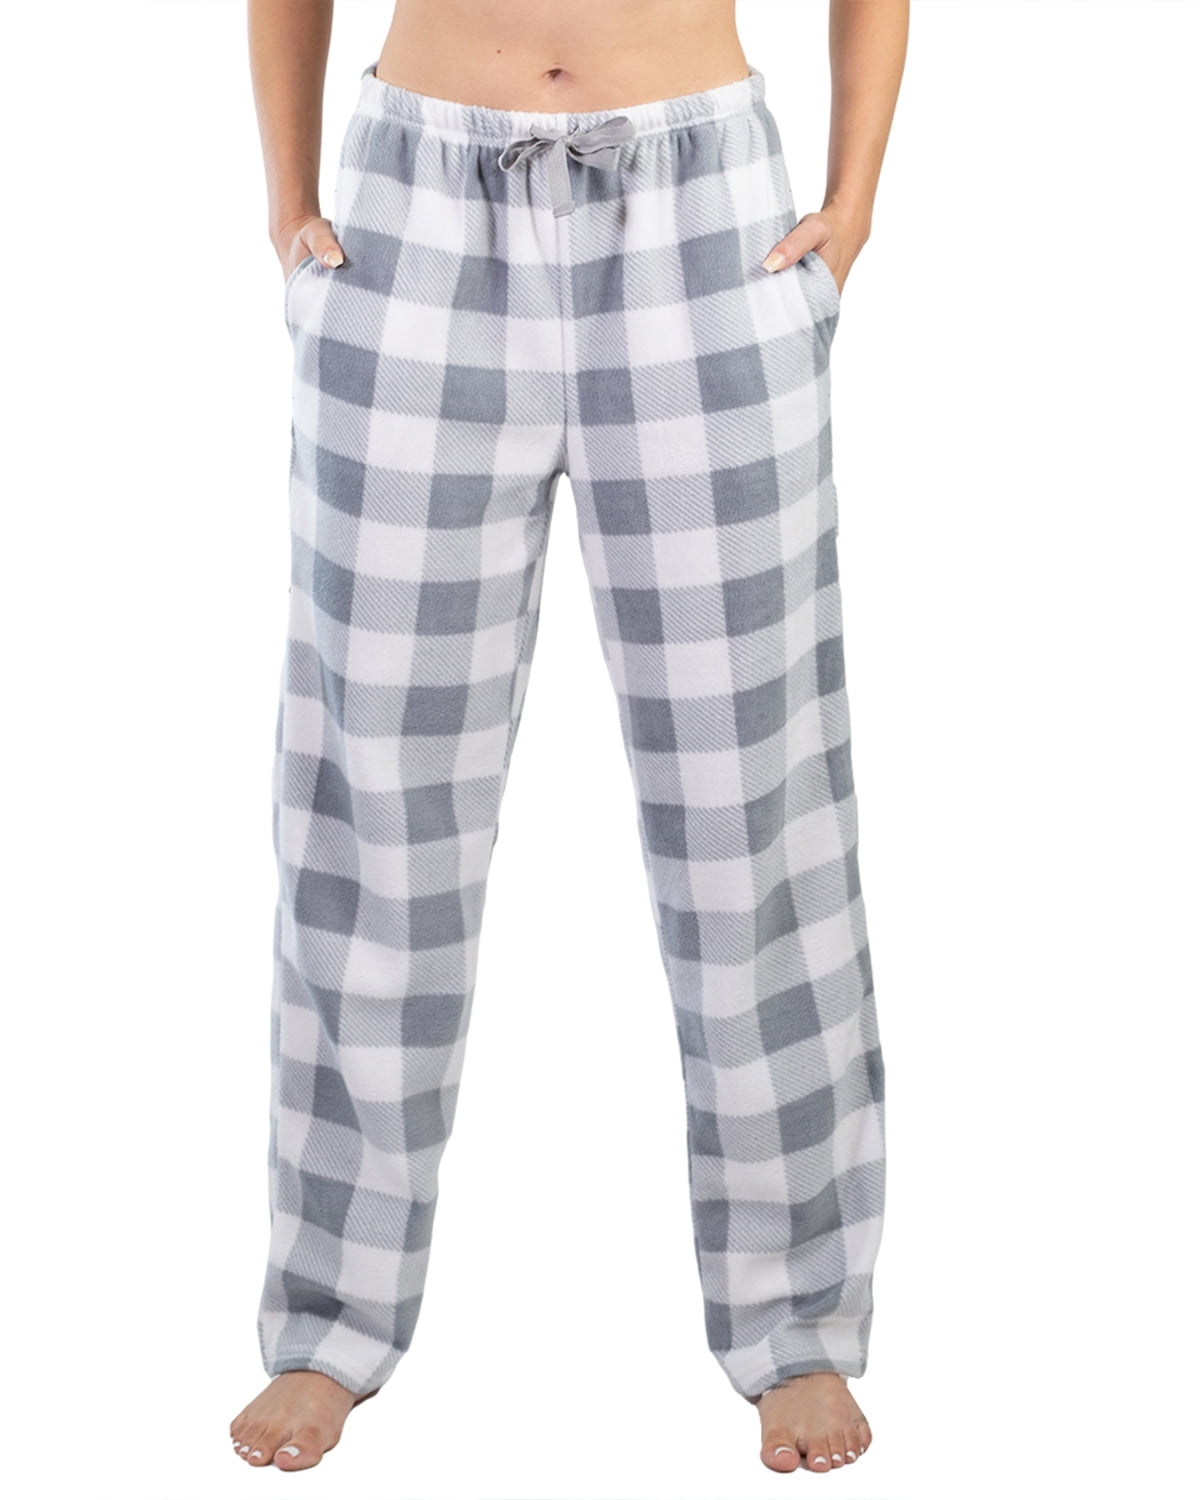 Jo & Bette Women's Fleece Pajama Pants with Pockets, Plaid Sleep